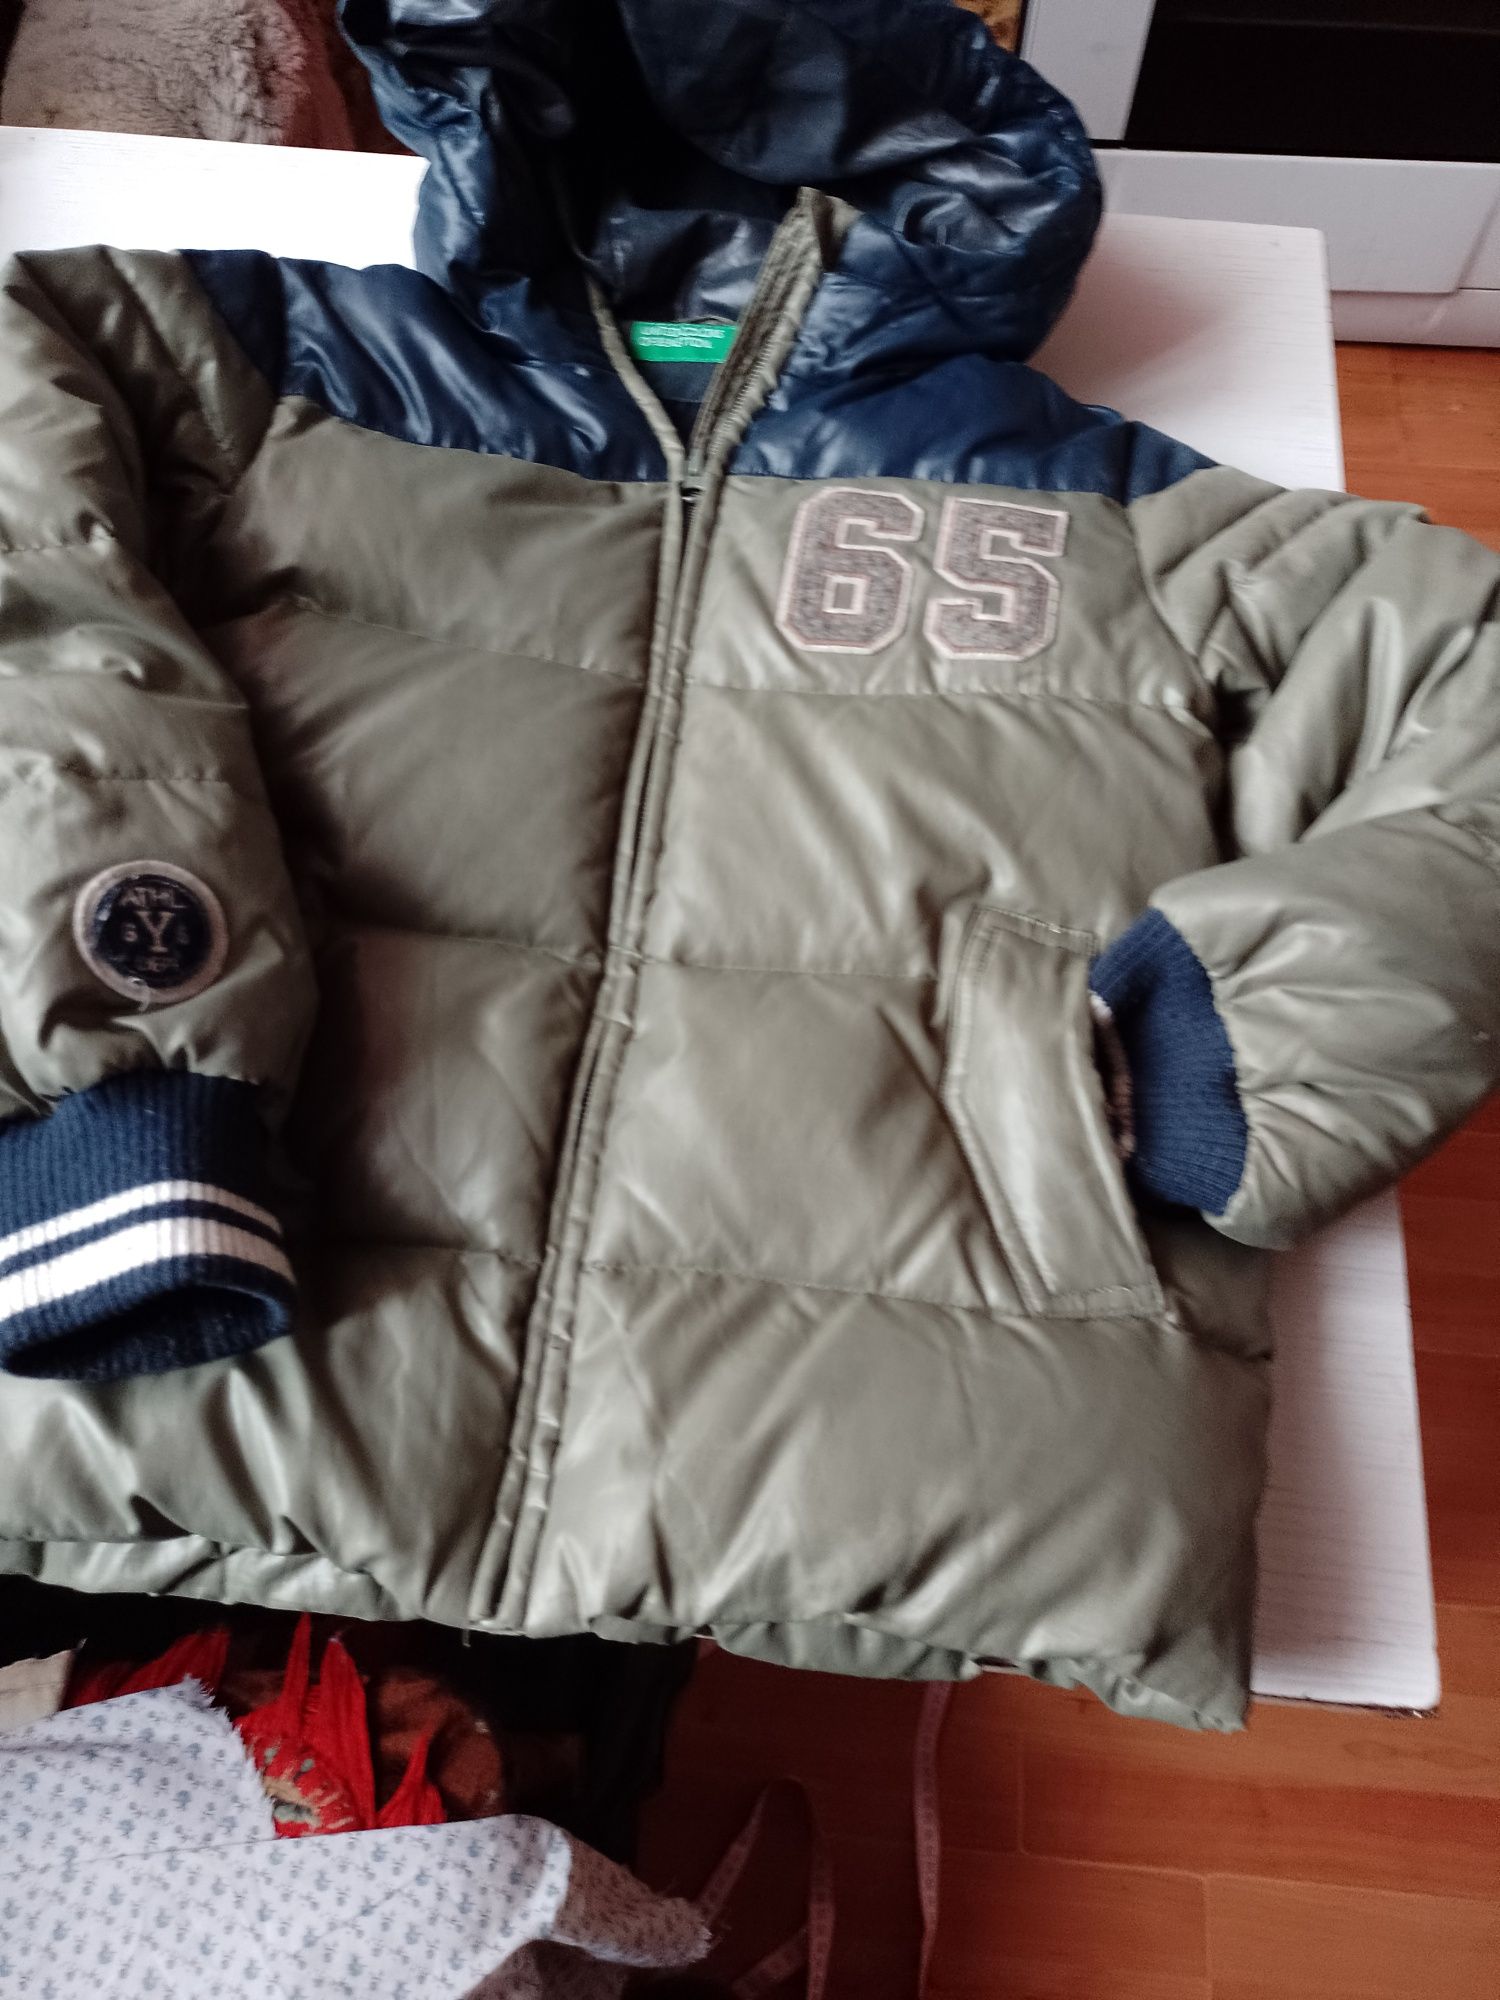 Теплая куртка (пуховик,) на мальчика ,10-13 лет